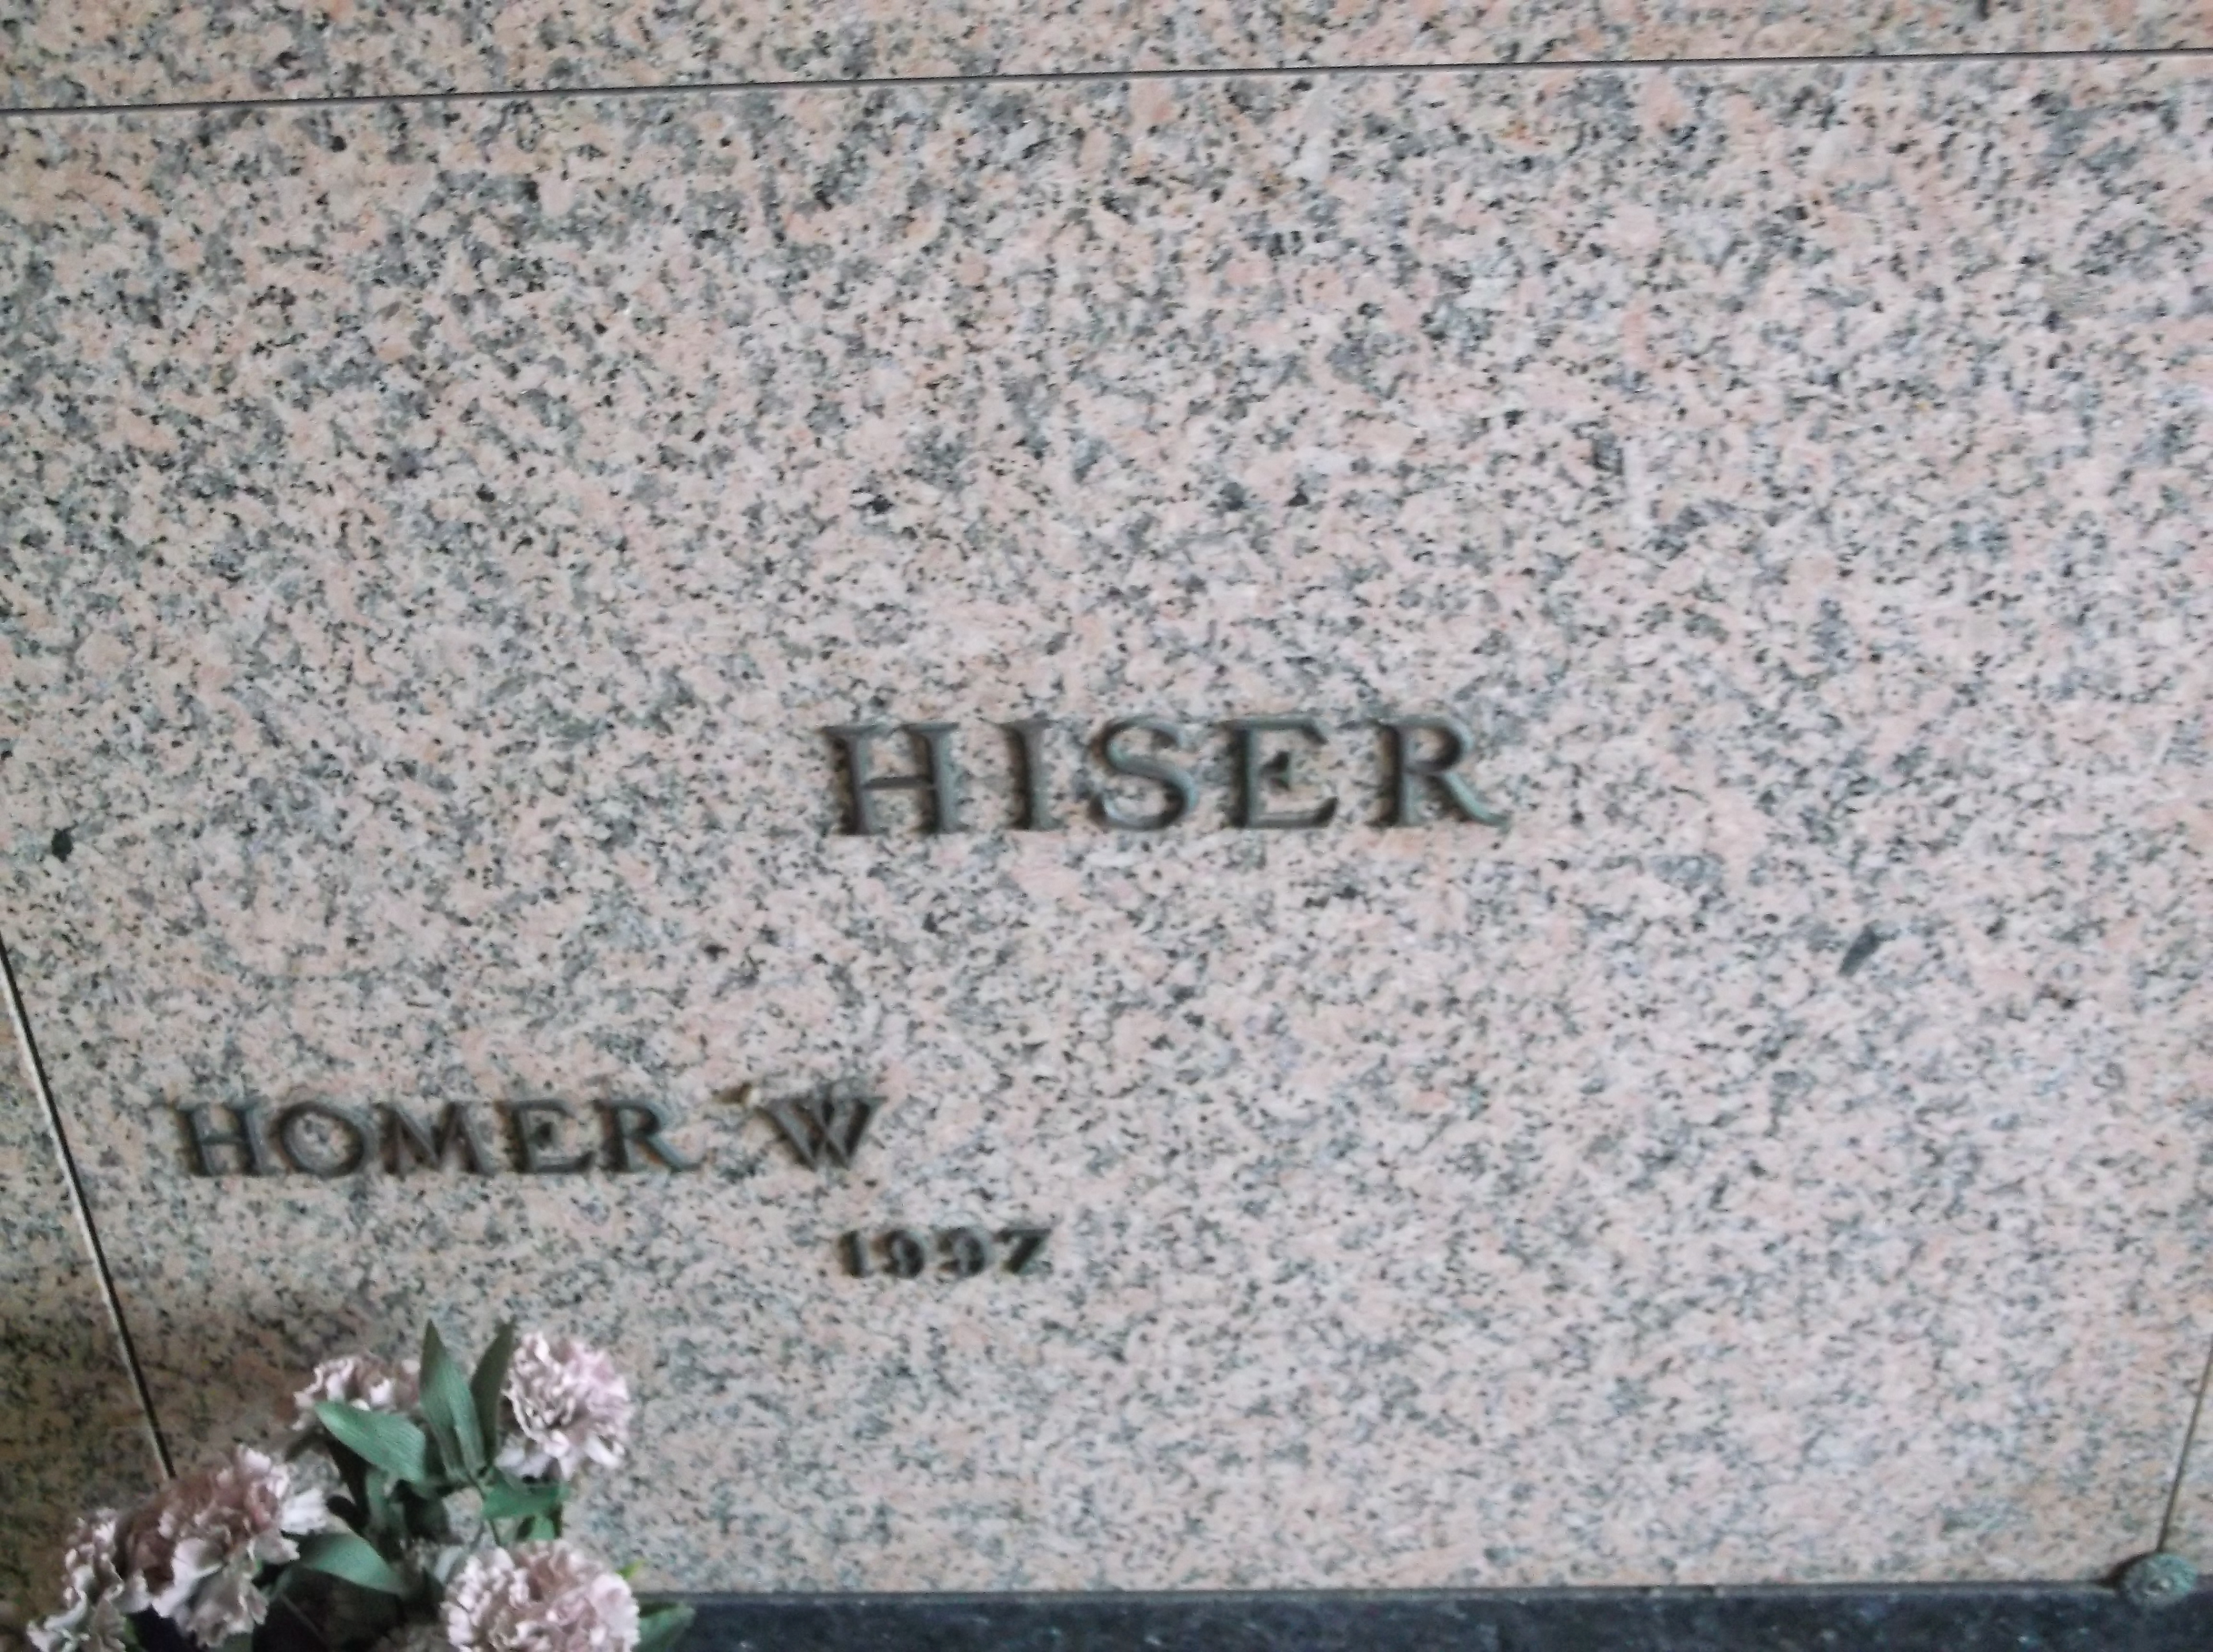 Homer W Hiser